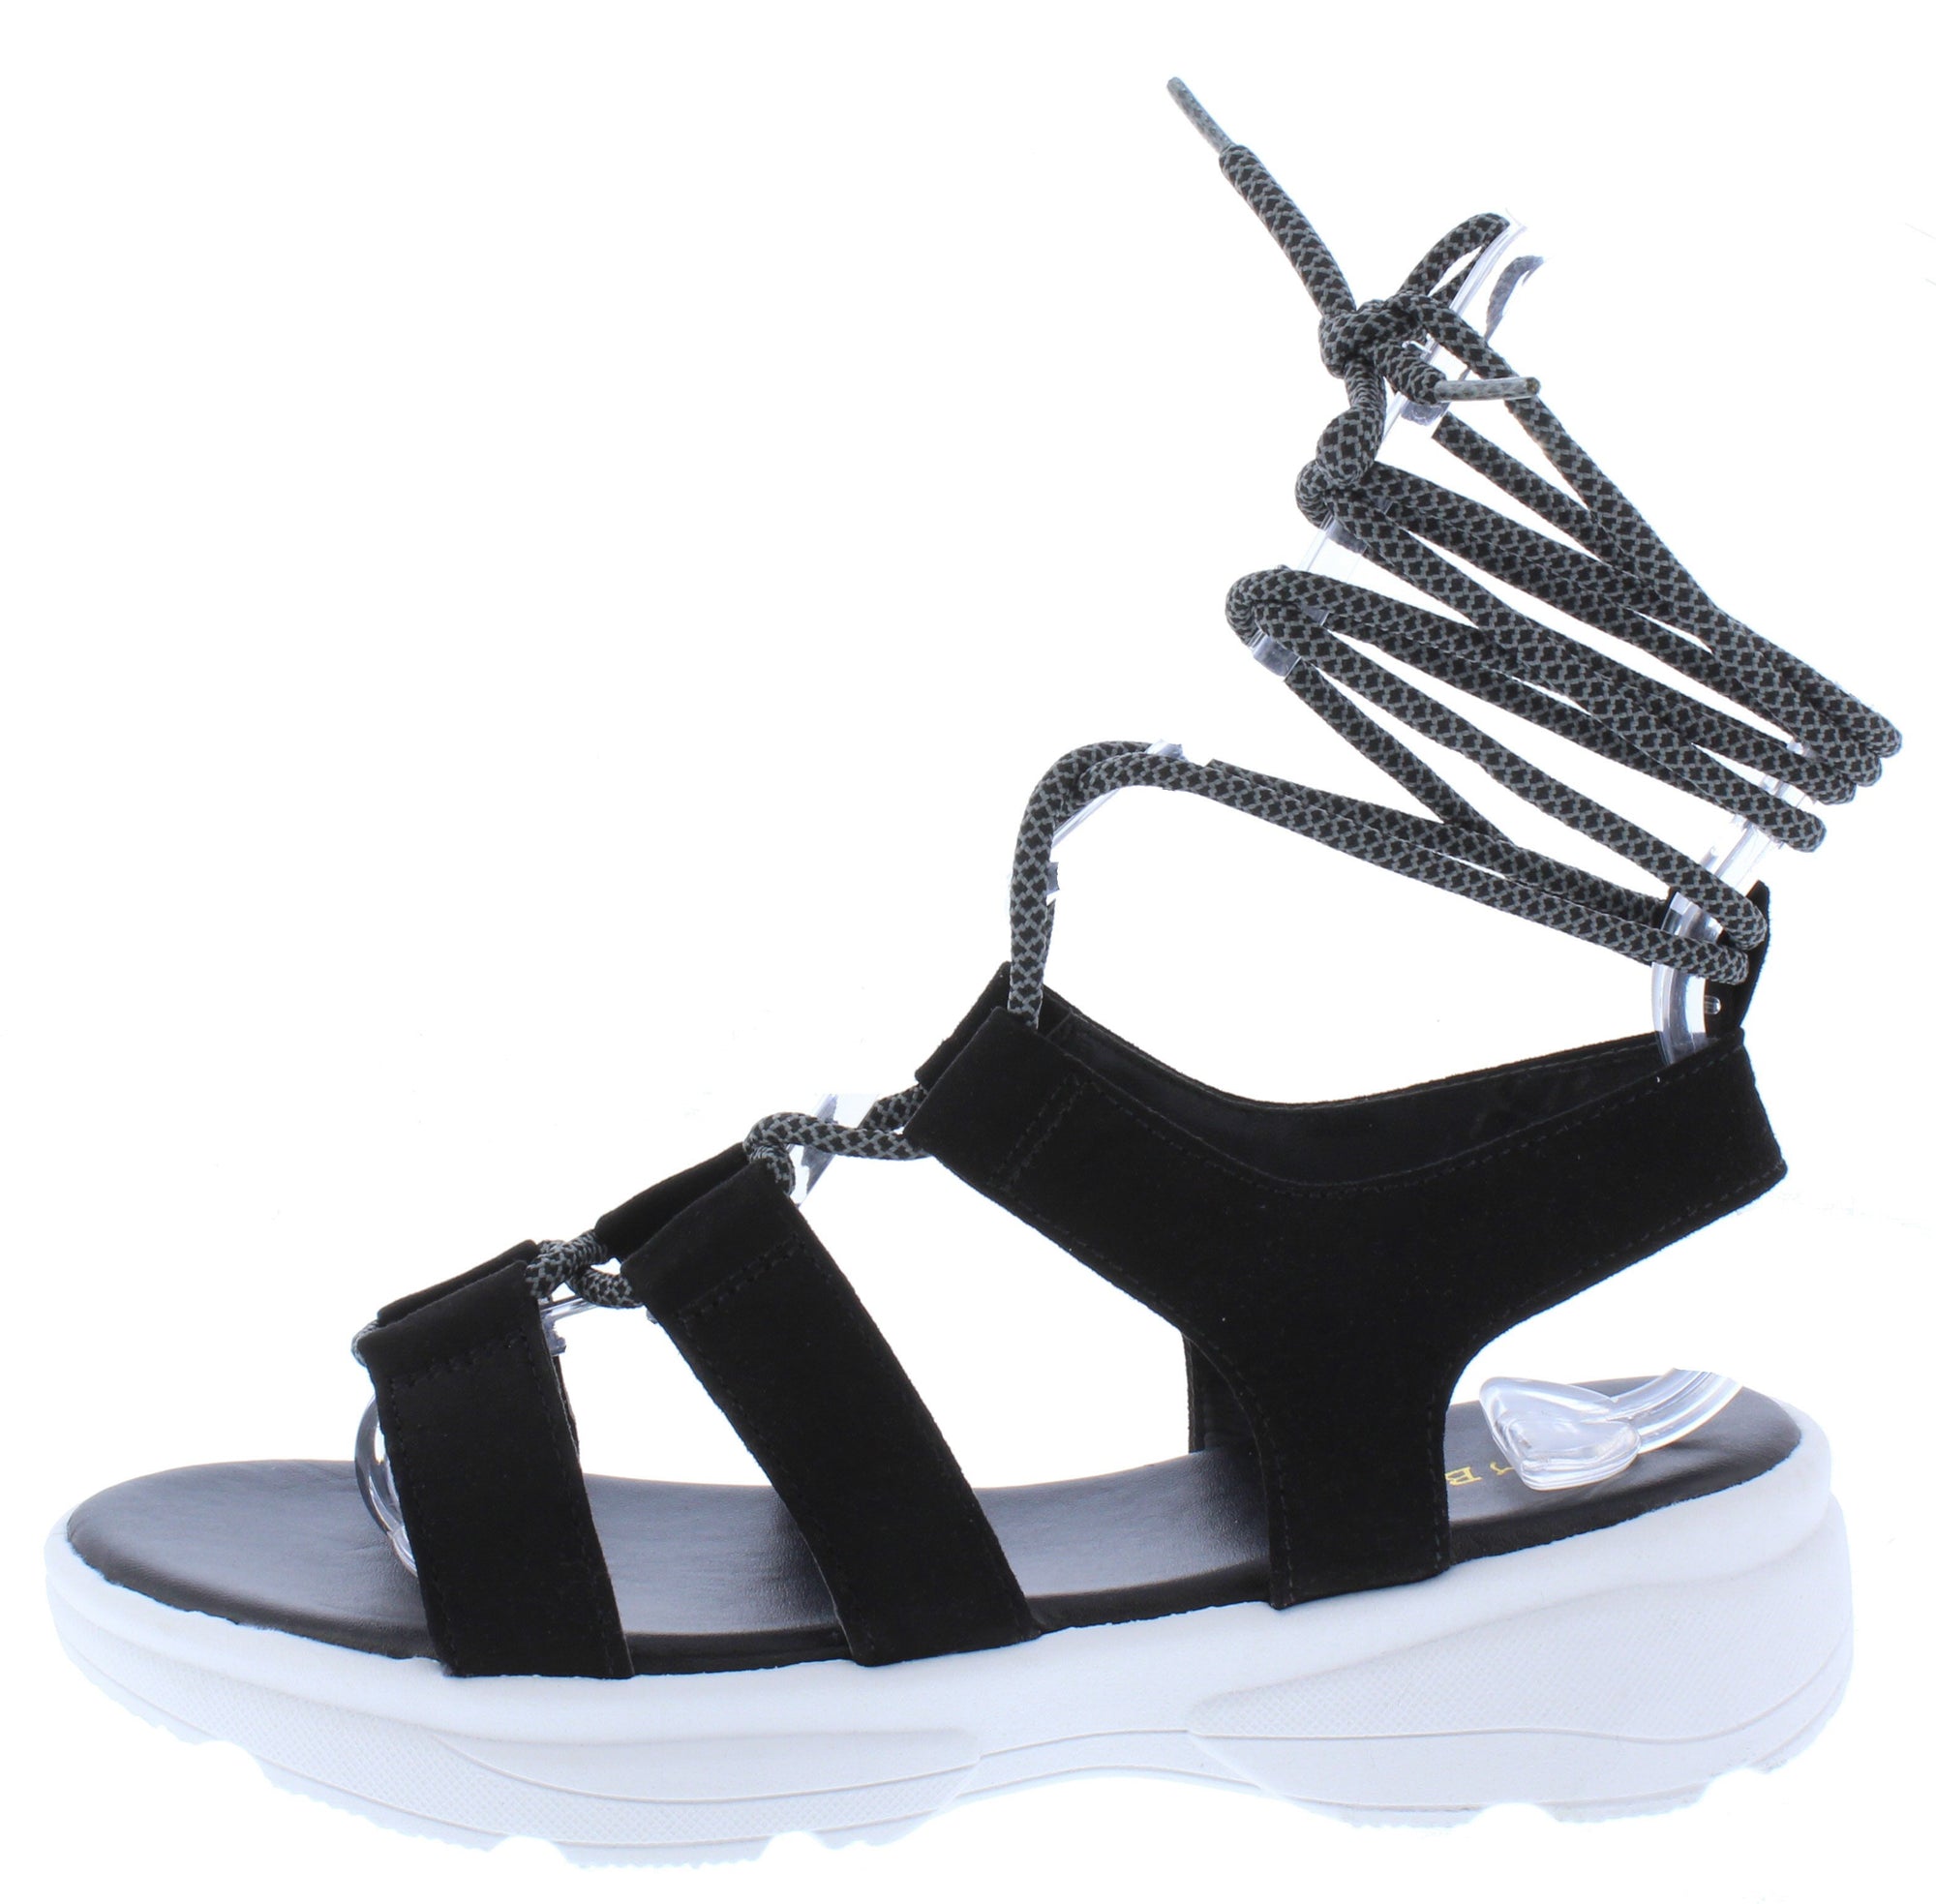 black ghillie sandals